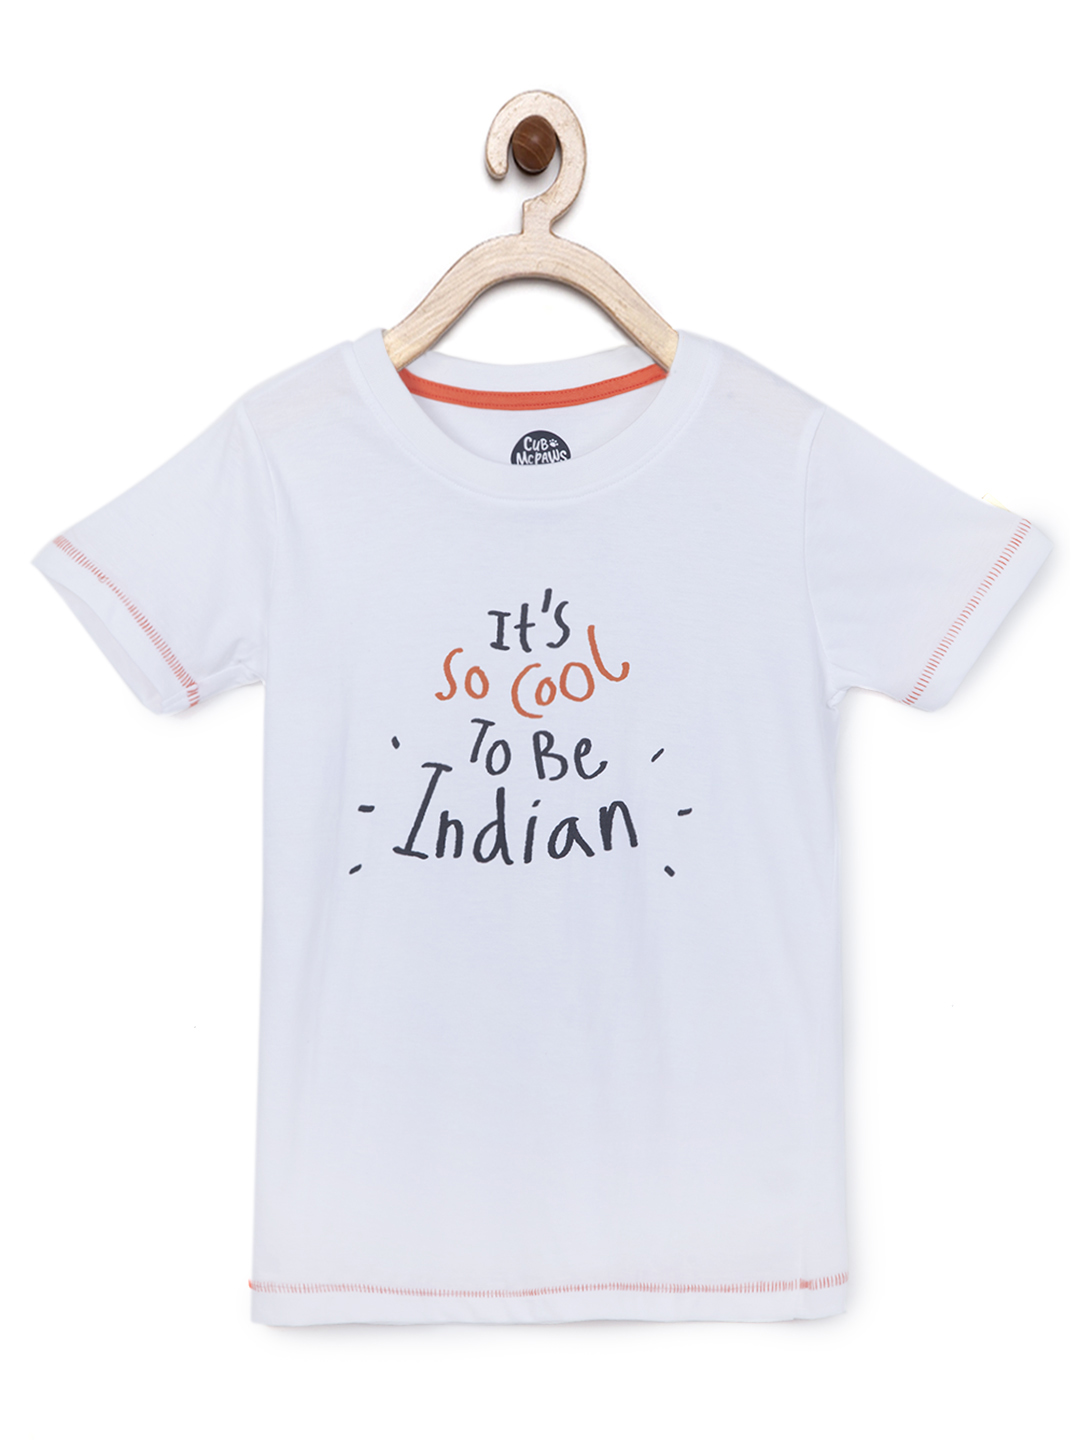 Boys India Themed T-shirt (EOSS)